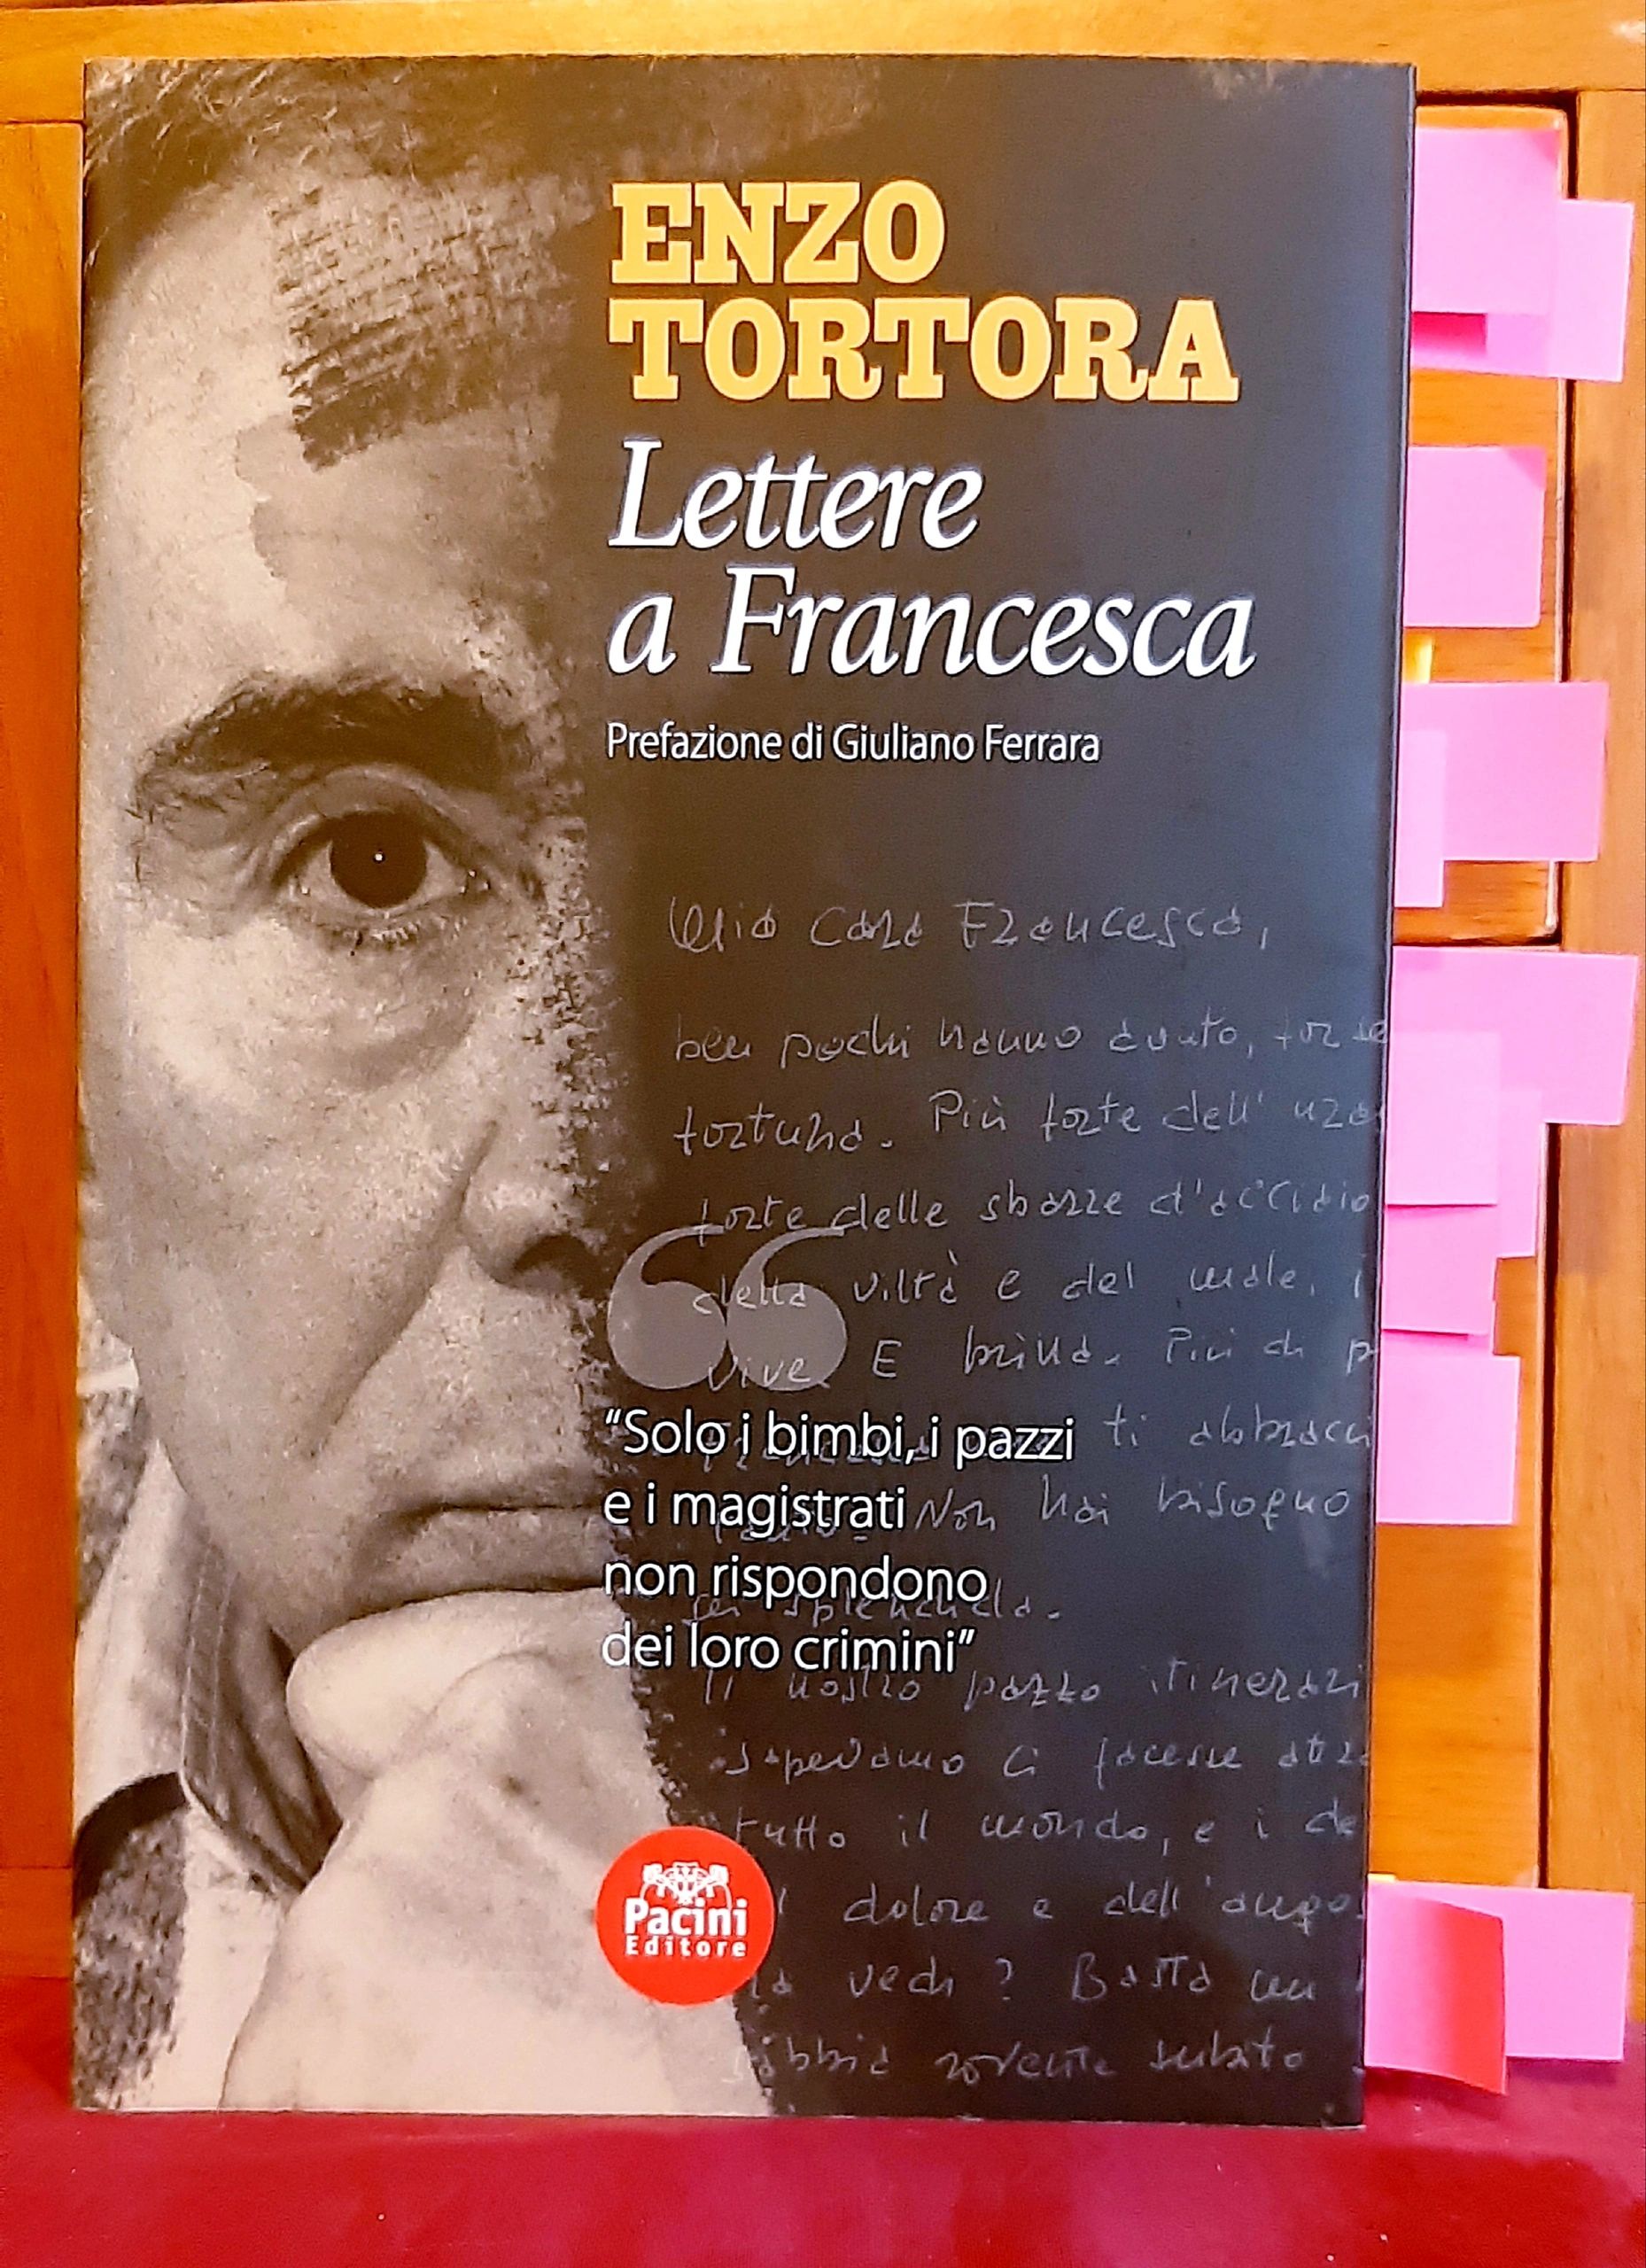 Lettere a Francesca di Enzo Tortora